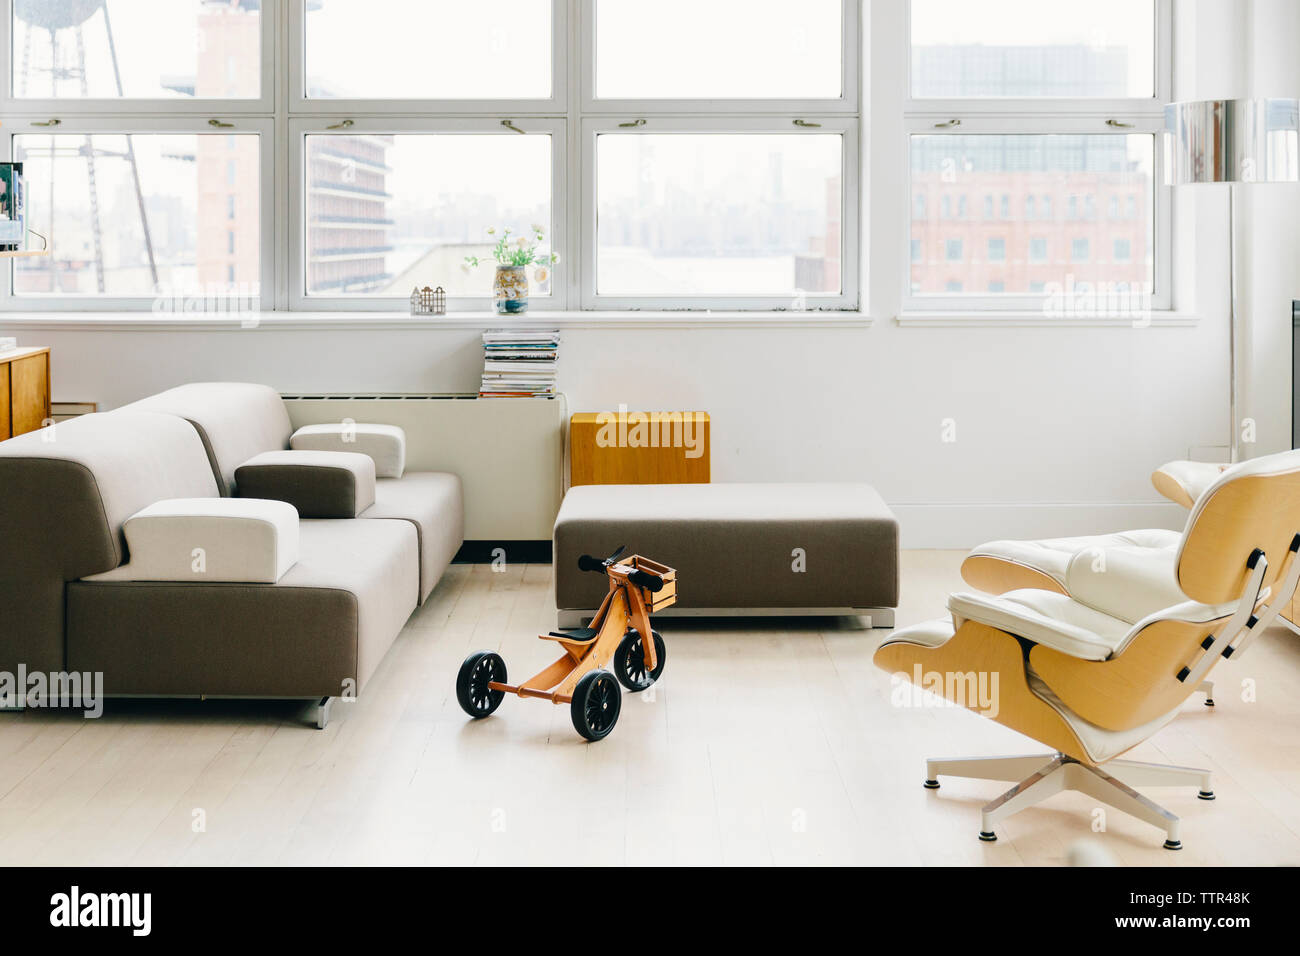 Furniture on hardwood floor against windows in startup office Stock Photo